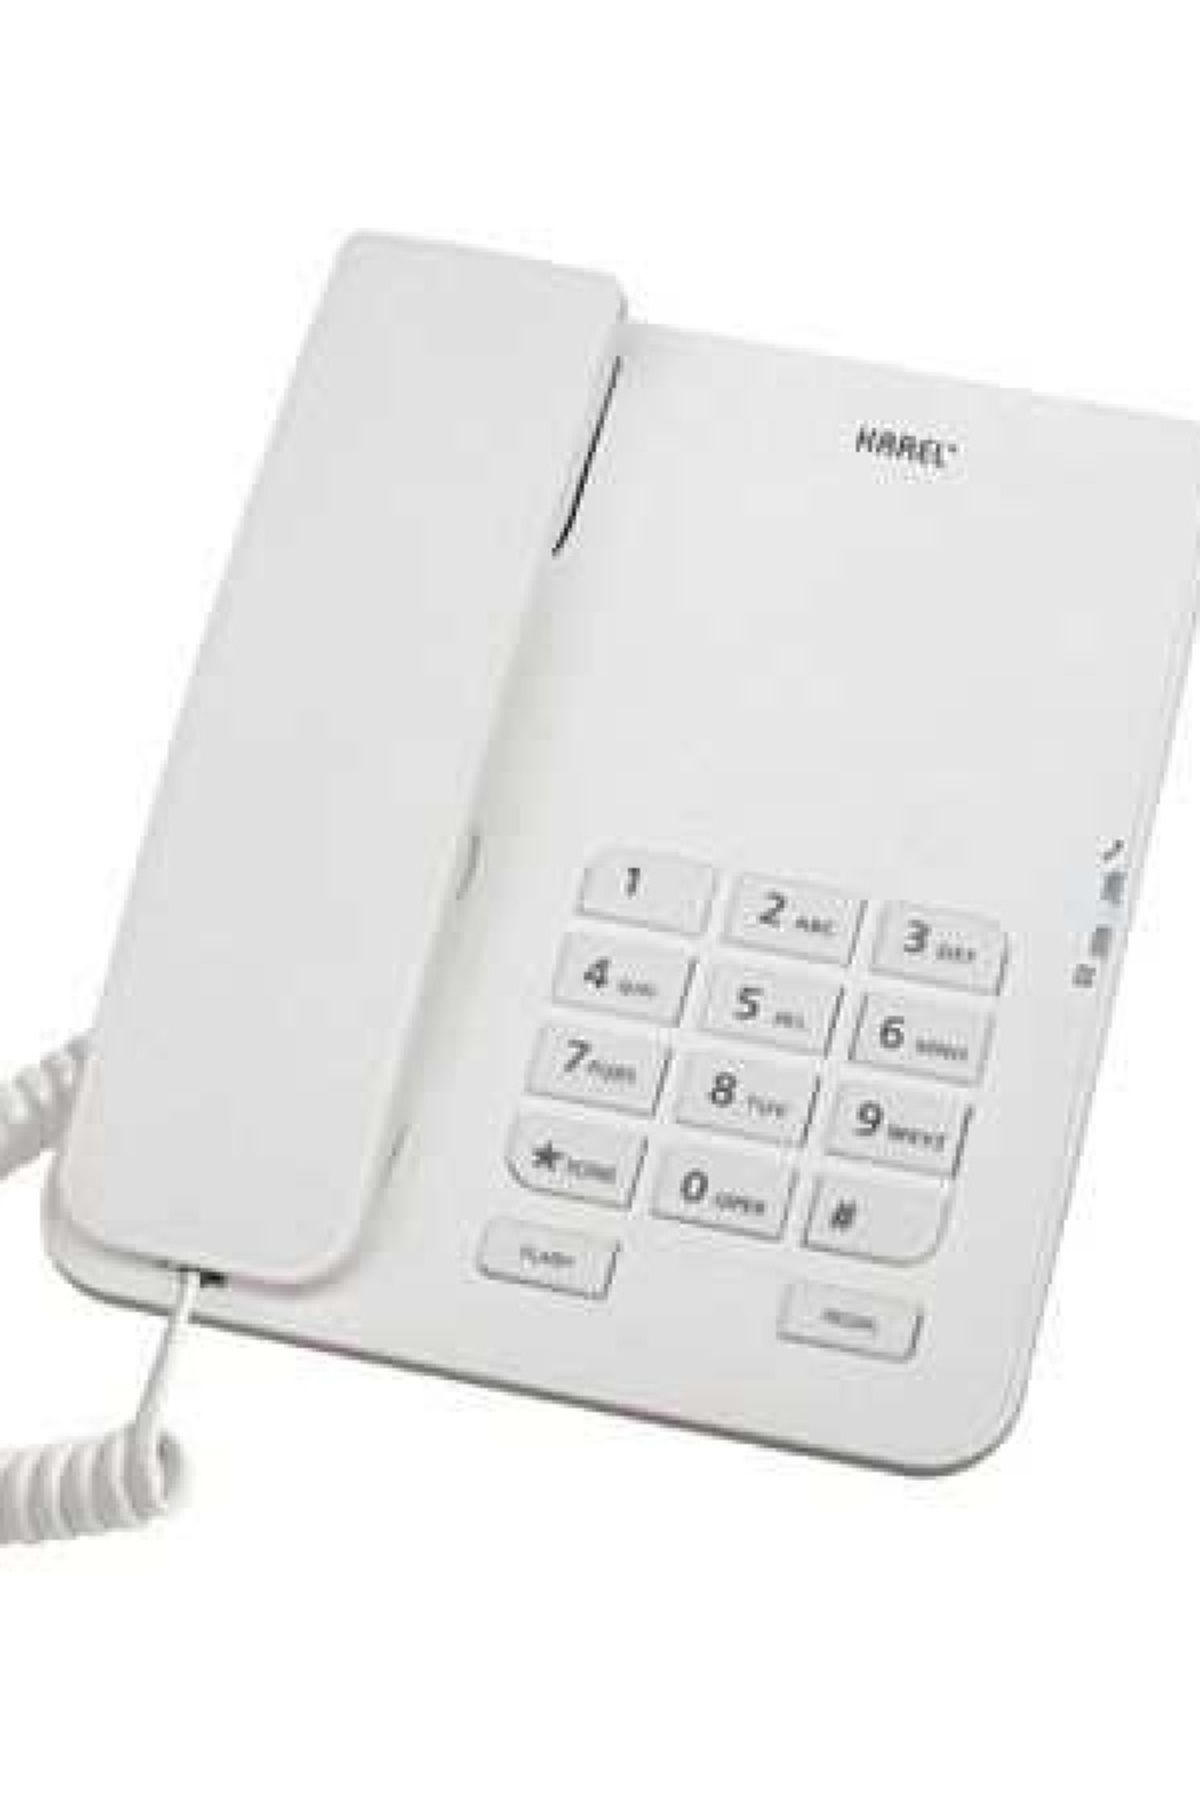 KAREL Tm140 Beyaz Analog Masa Üstü Kablolu Telefon